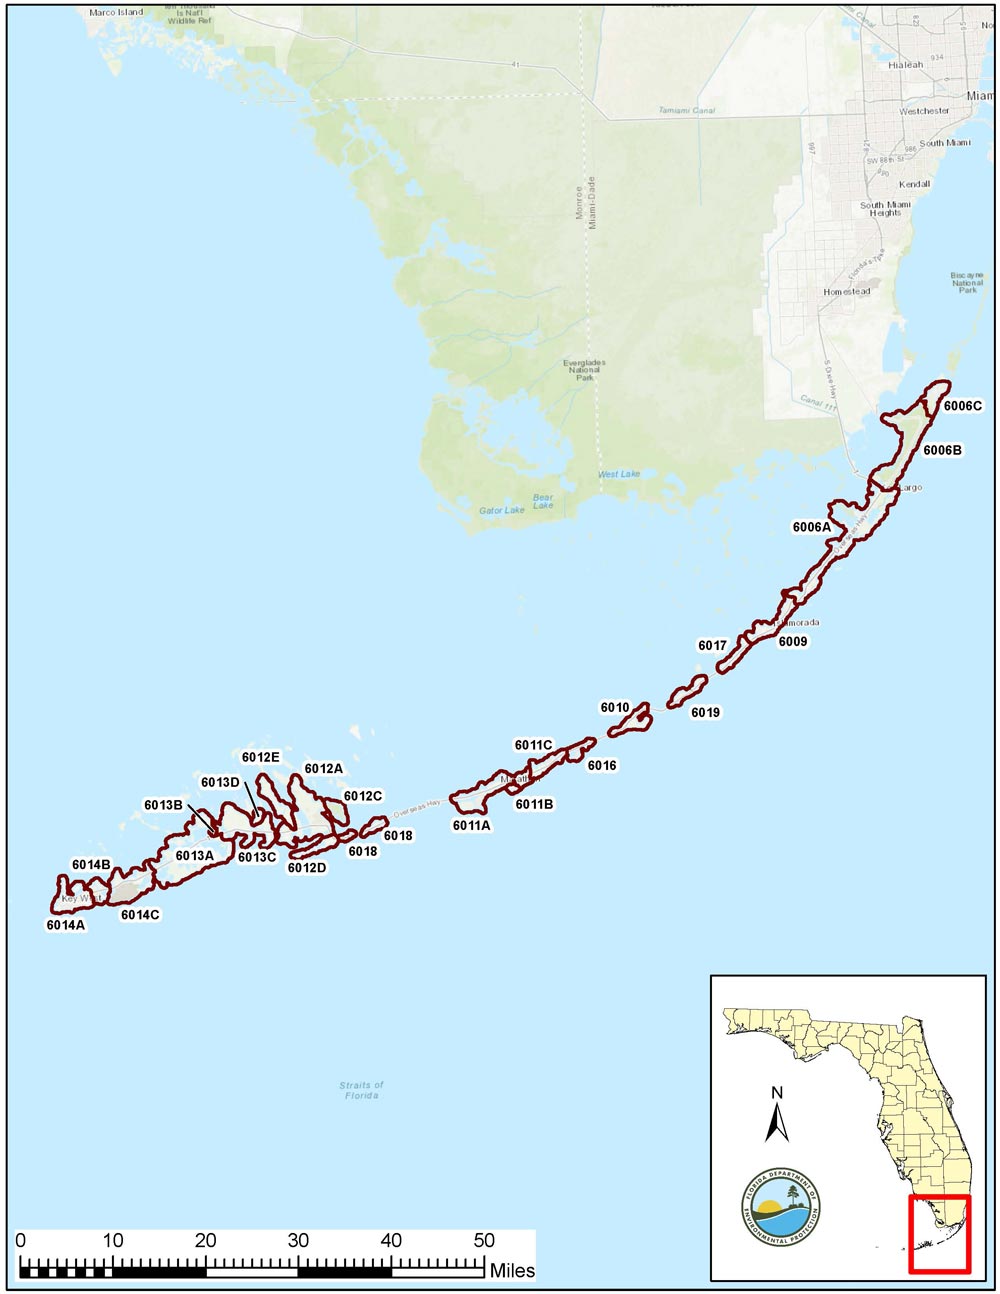 Map of WBID boundaries included in the Florida Keys alternative restoration plan